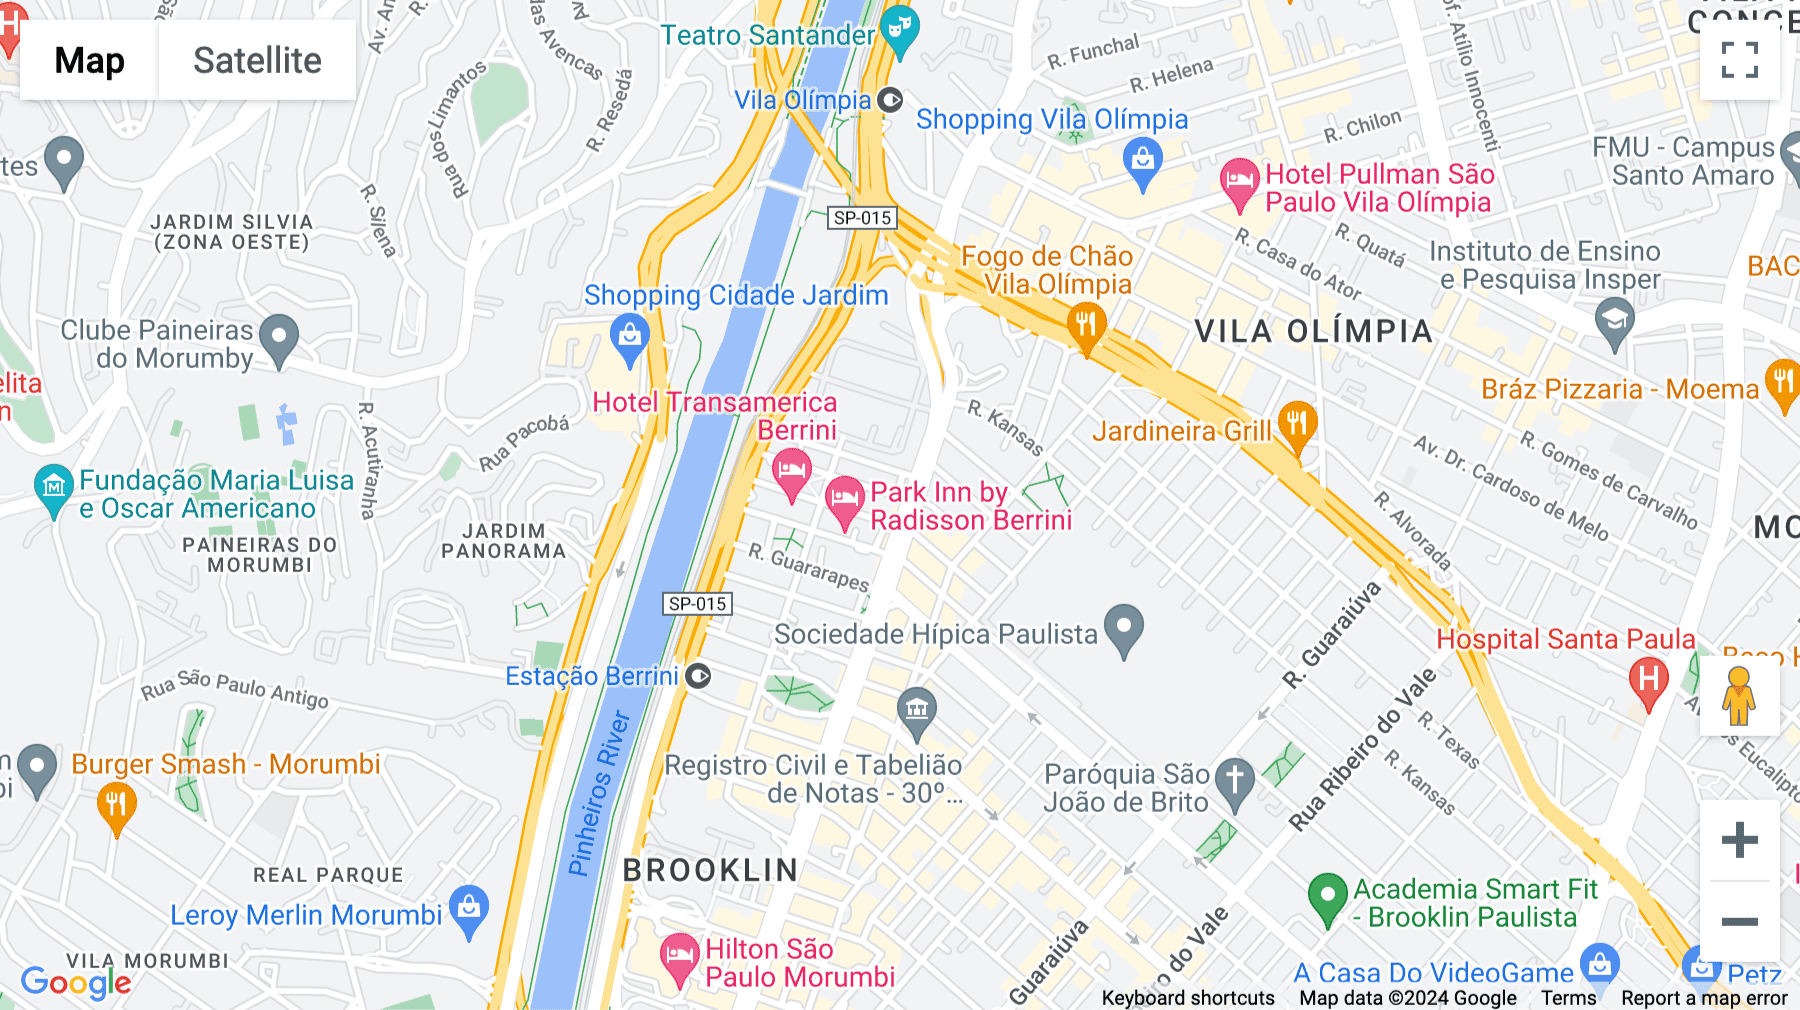 Click for interative map of Av. Engenheiro Luís Carlos Berrini, 550, Itaim Bibi, Sao Paulo